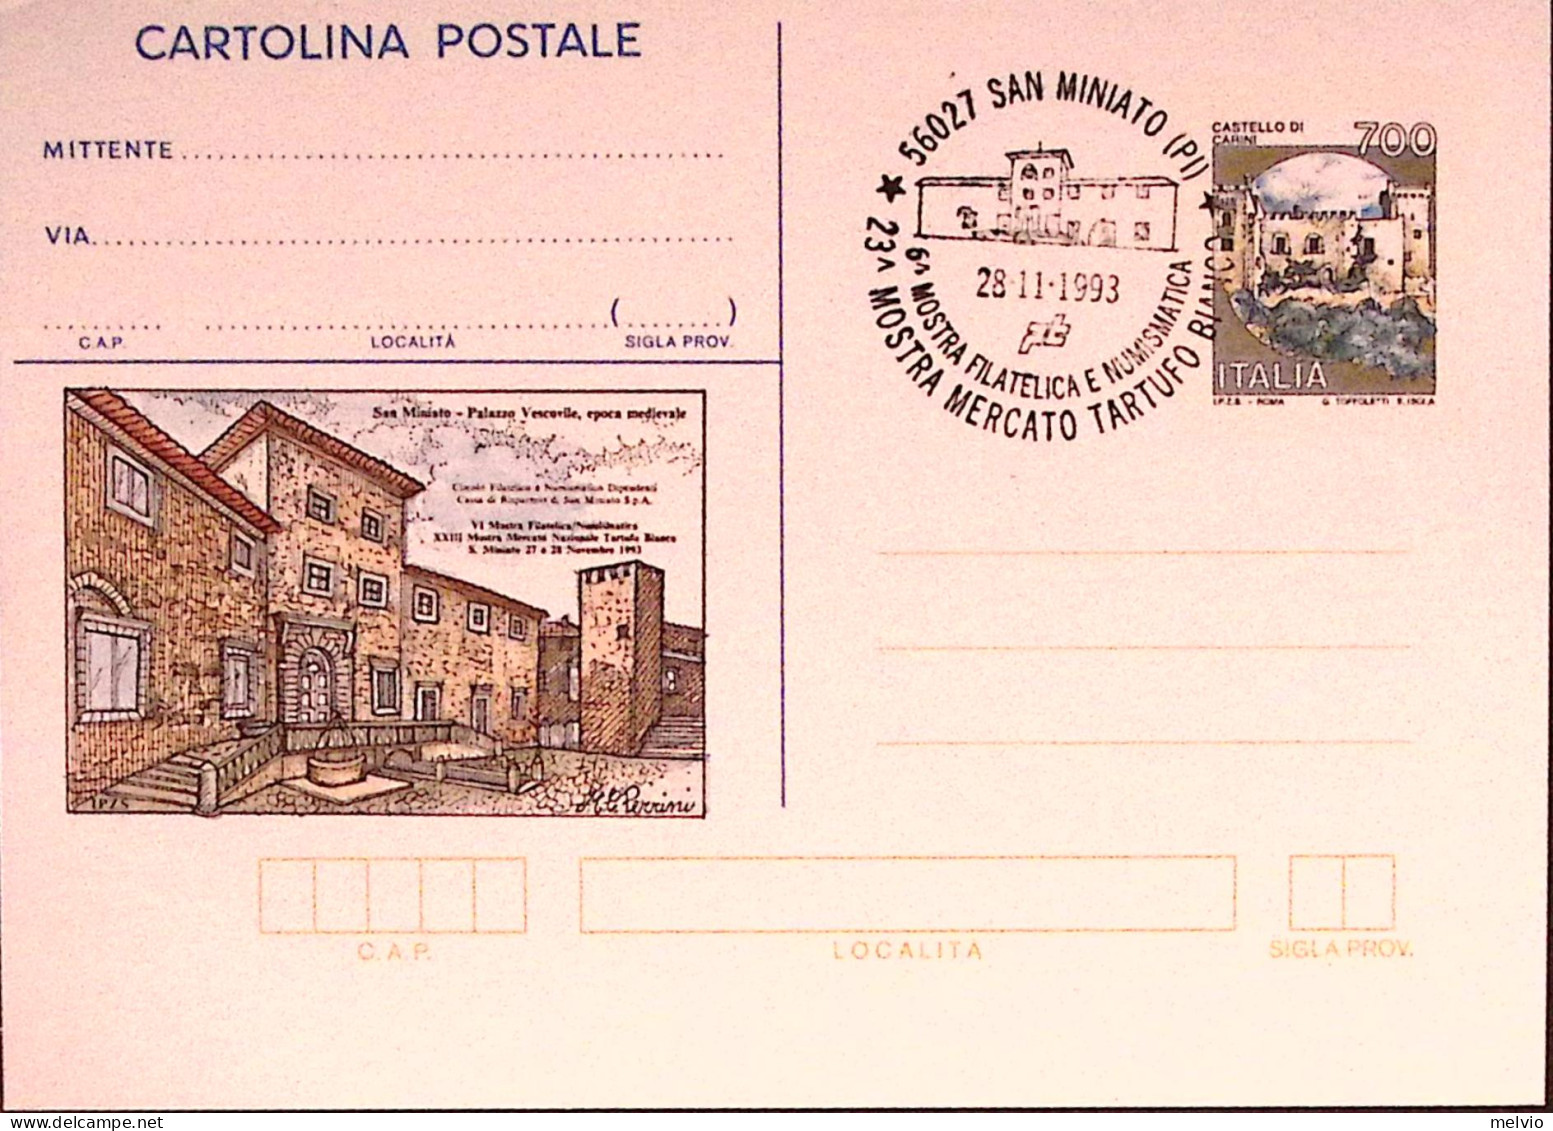 1993-SAN MINIATO Cartolina Postale IPZS Lire 700 Con Ann Spec - Stamped Stationery